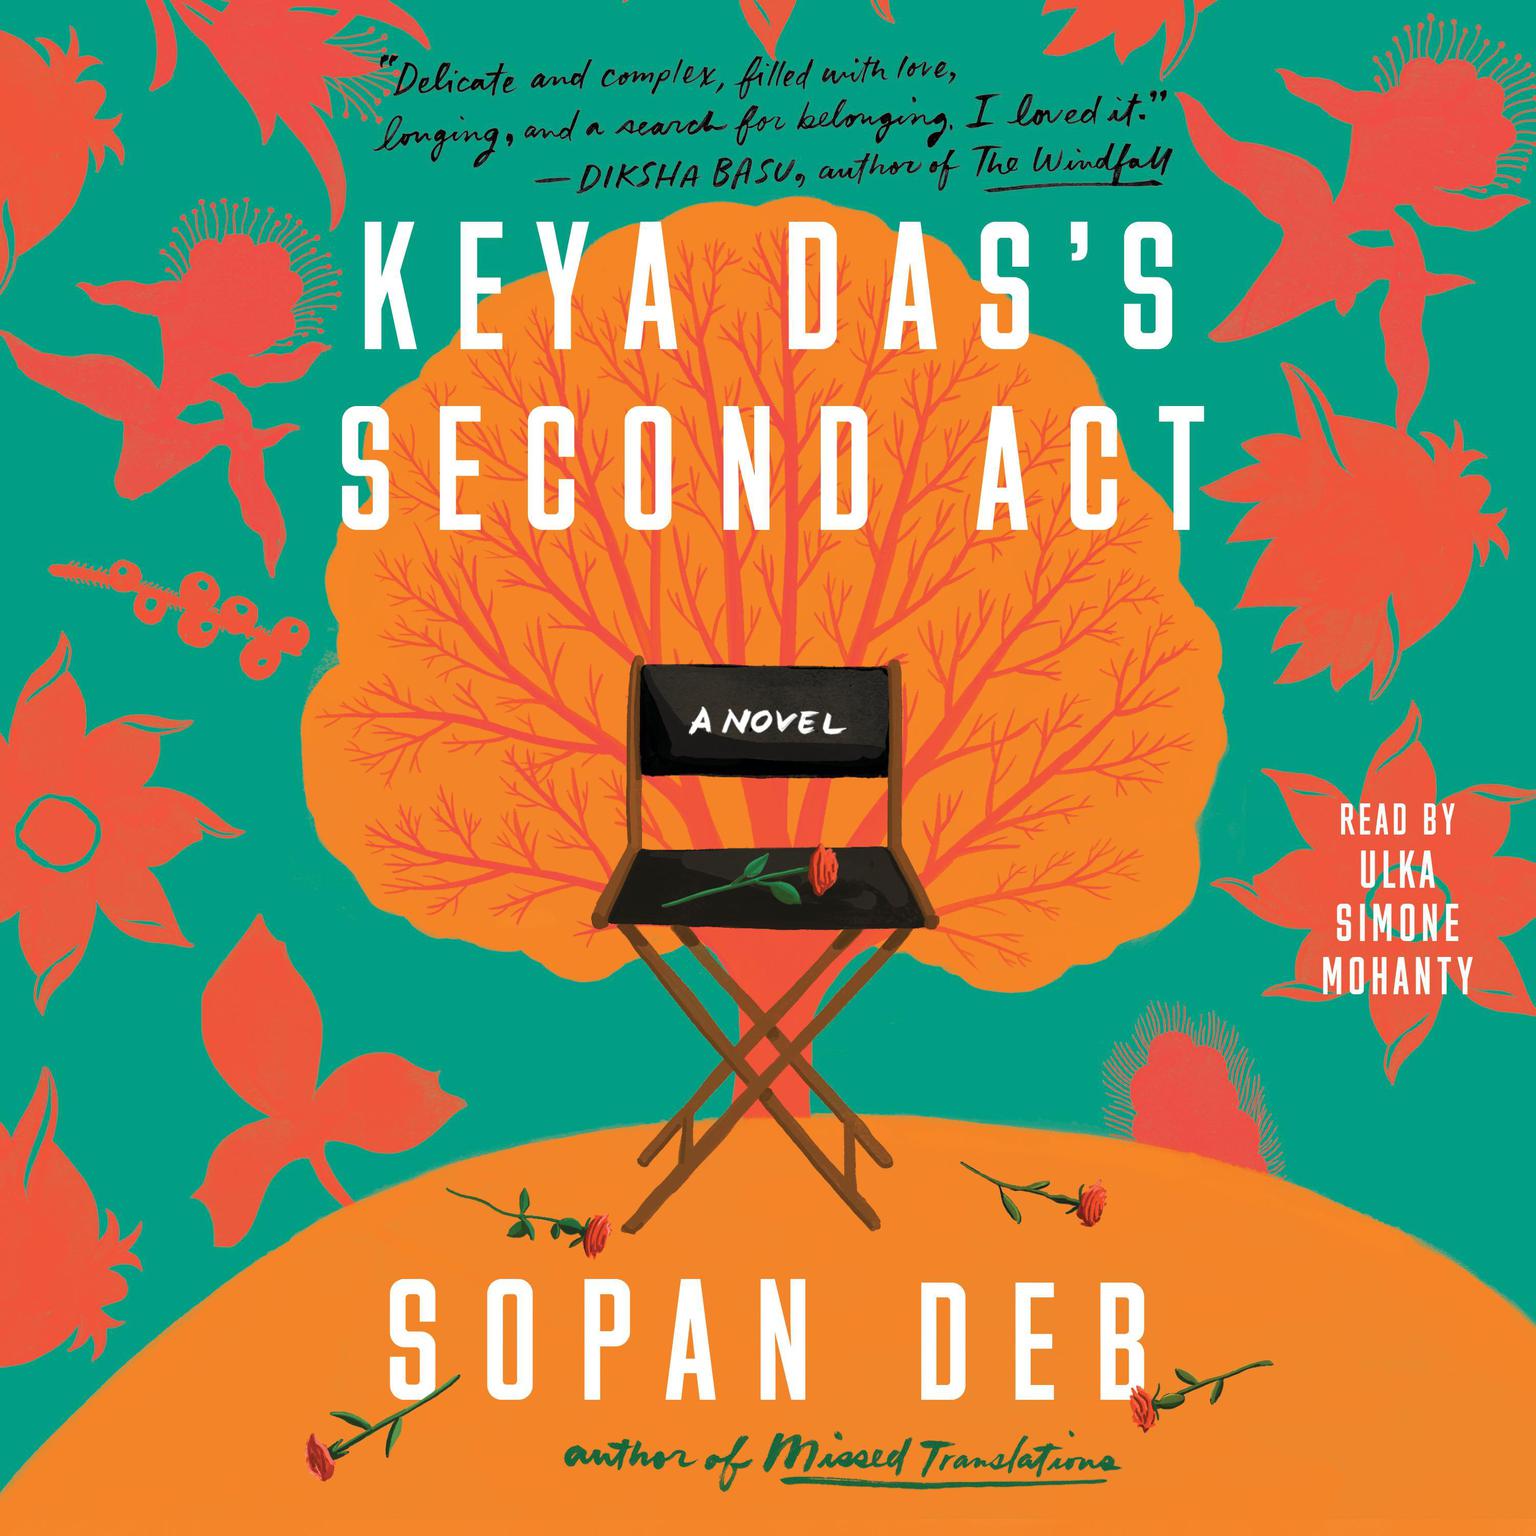 Keya Dass Second Act Audiobook, by Sopan Deb